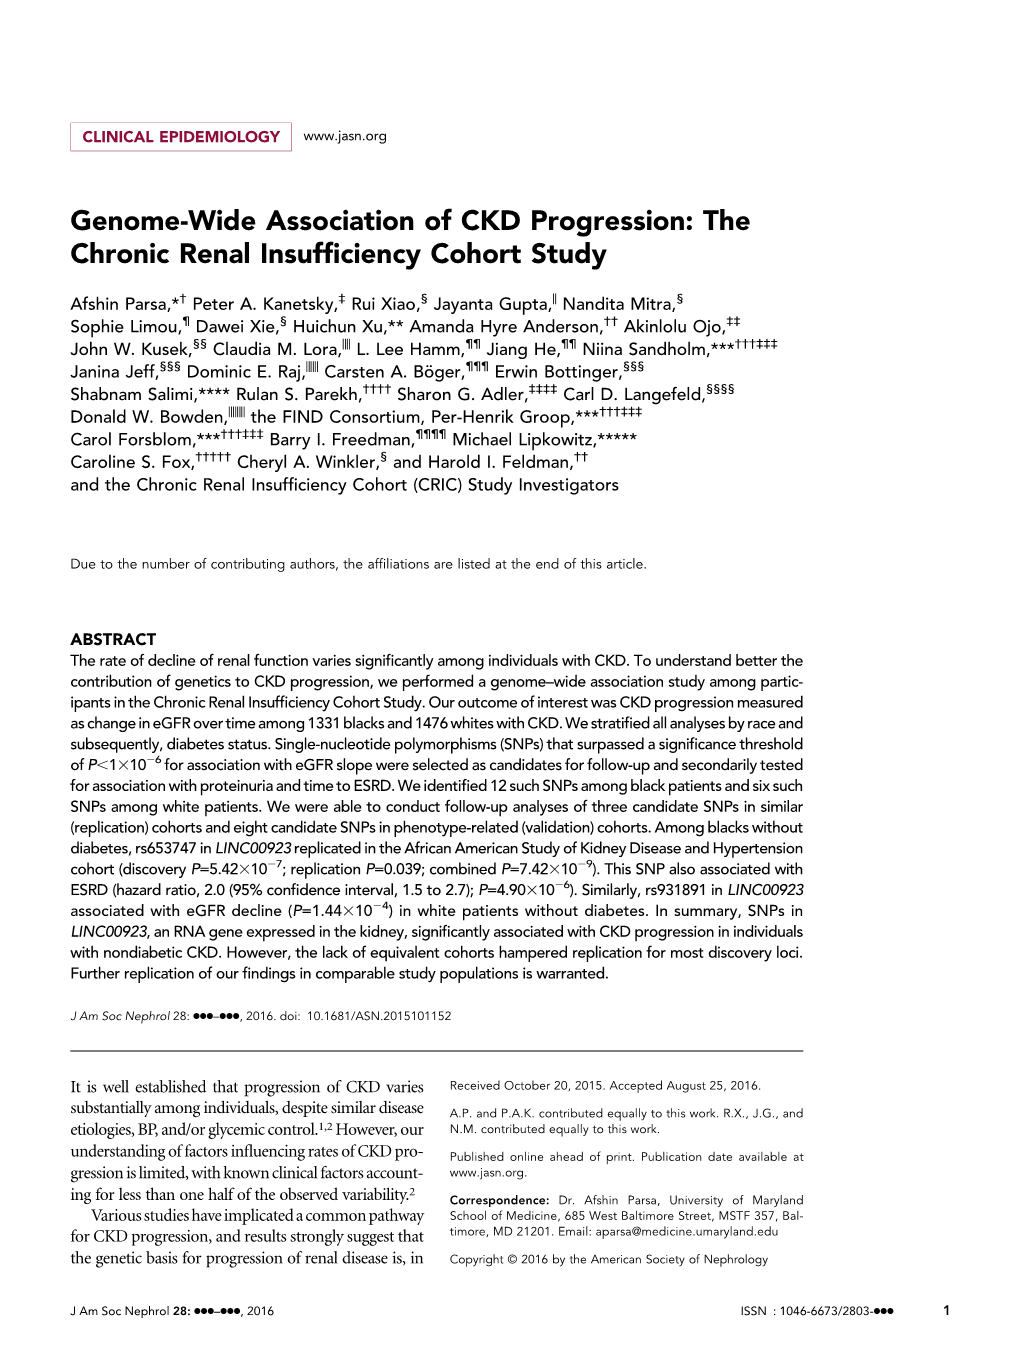 Genome-Wide Association of CKD Progression: the Chronic Renal Insufﬁciency Cohort Study